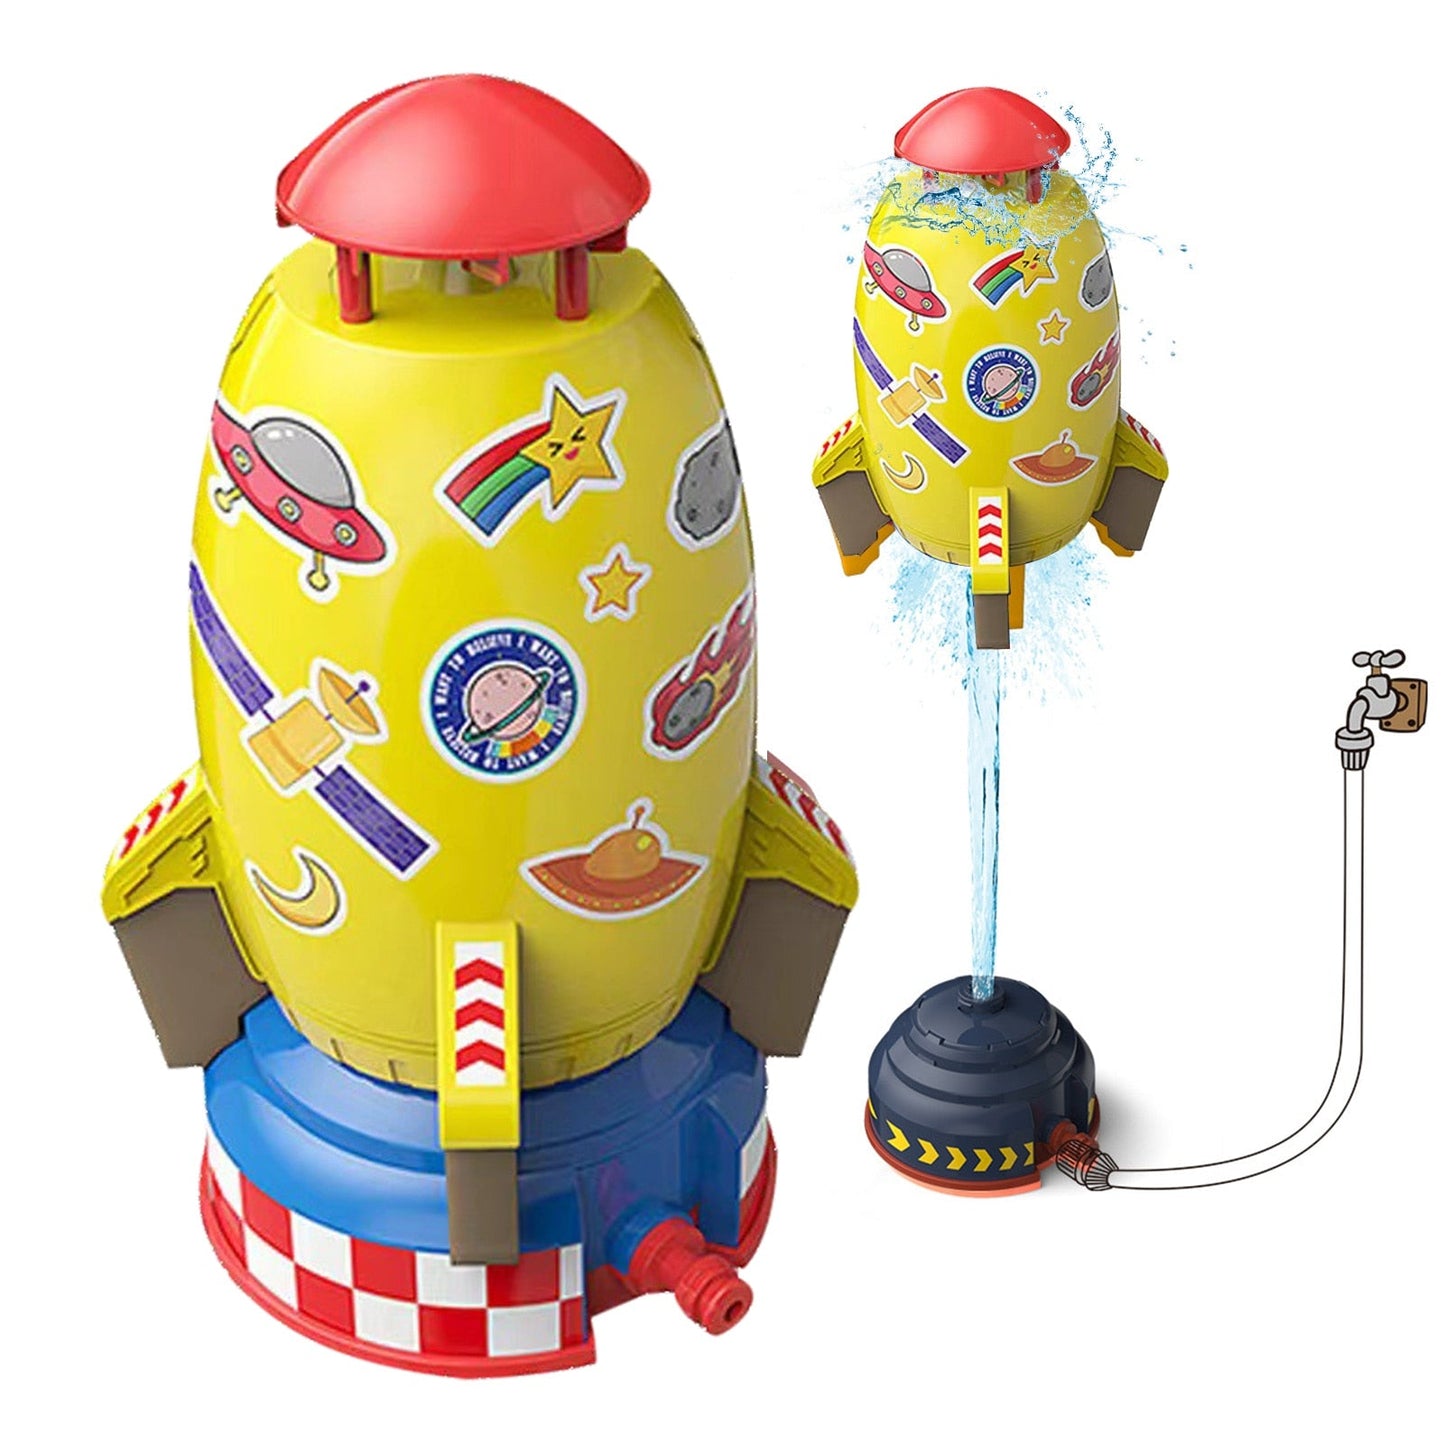 Water Spray Space Rocket Launcher Kids Toy